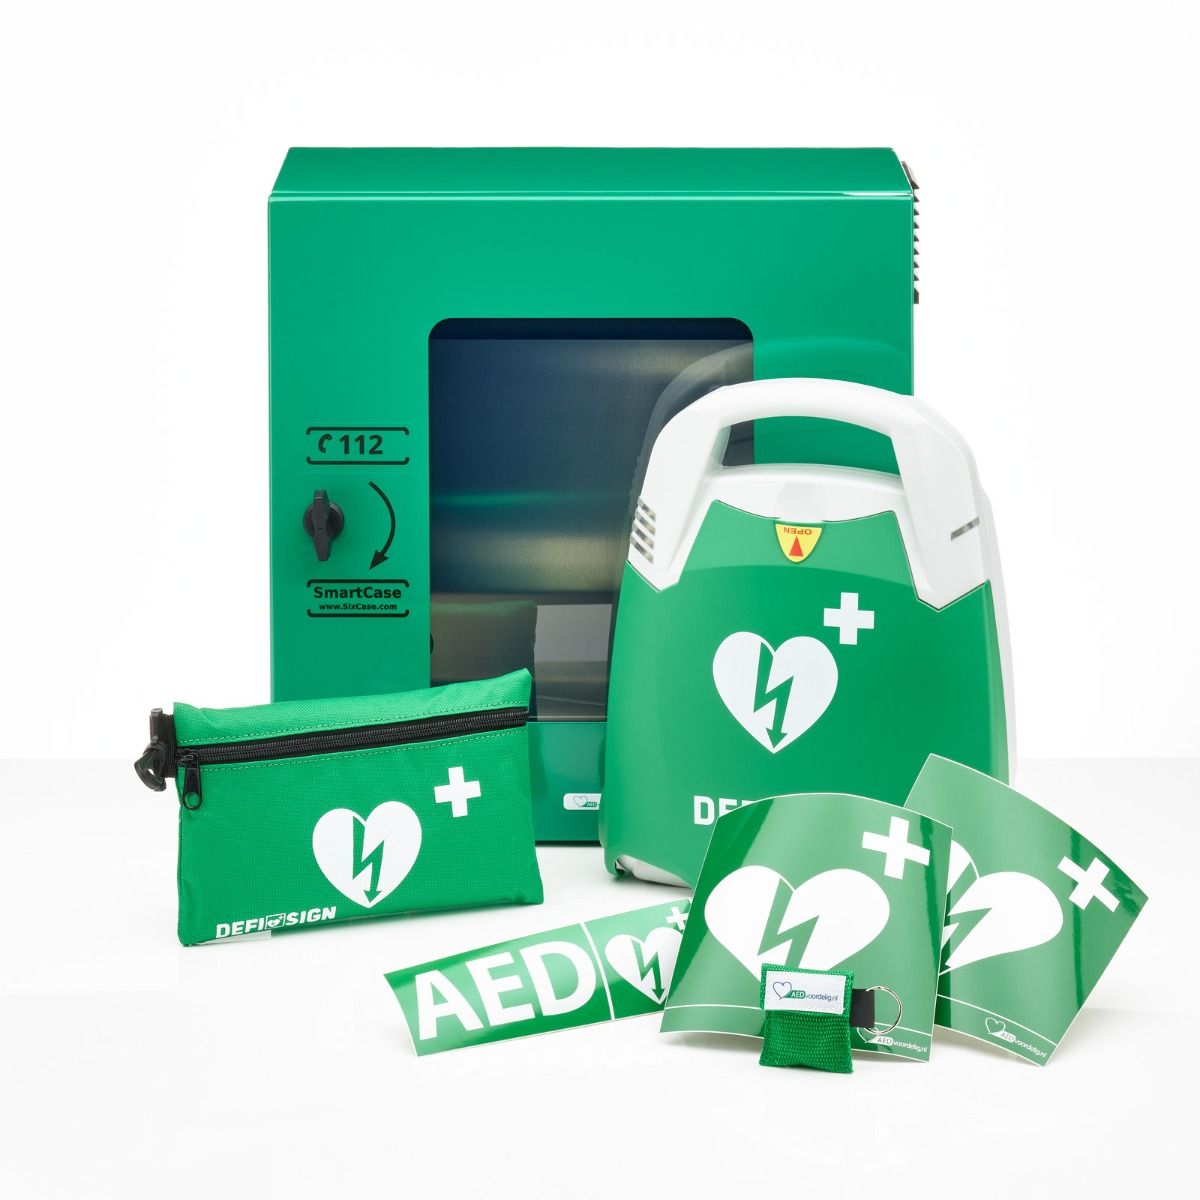 DefiSign LIFE AED + buitenkast-Groen-Halfautomaat